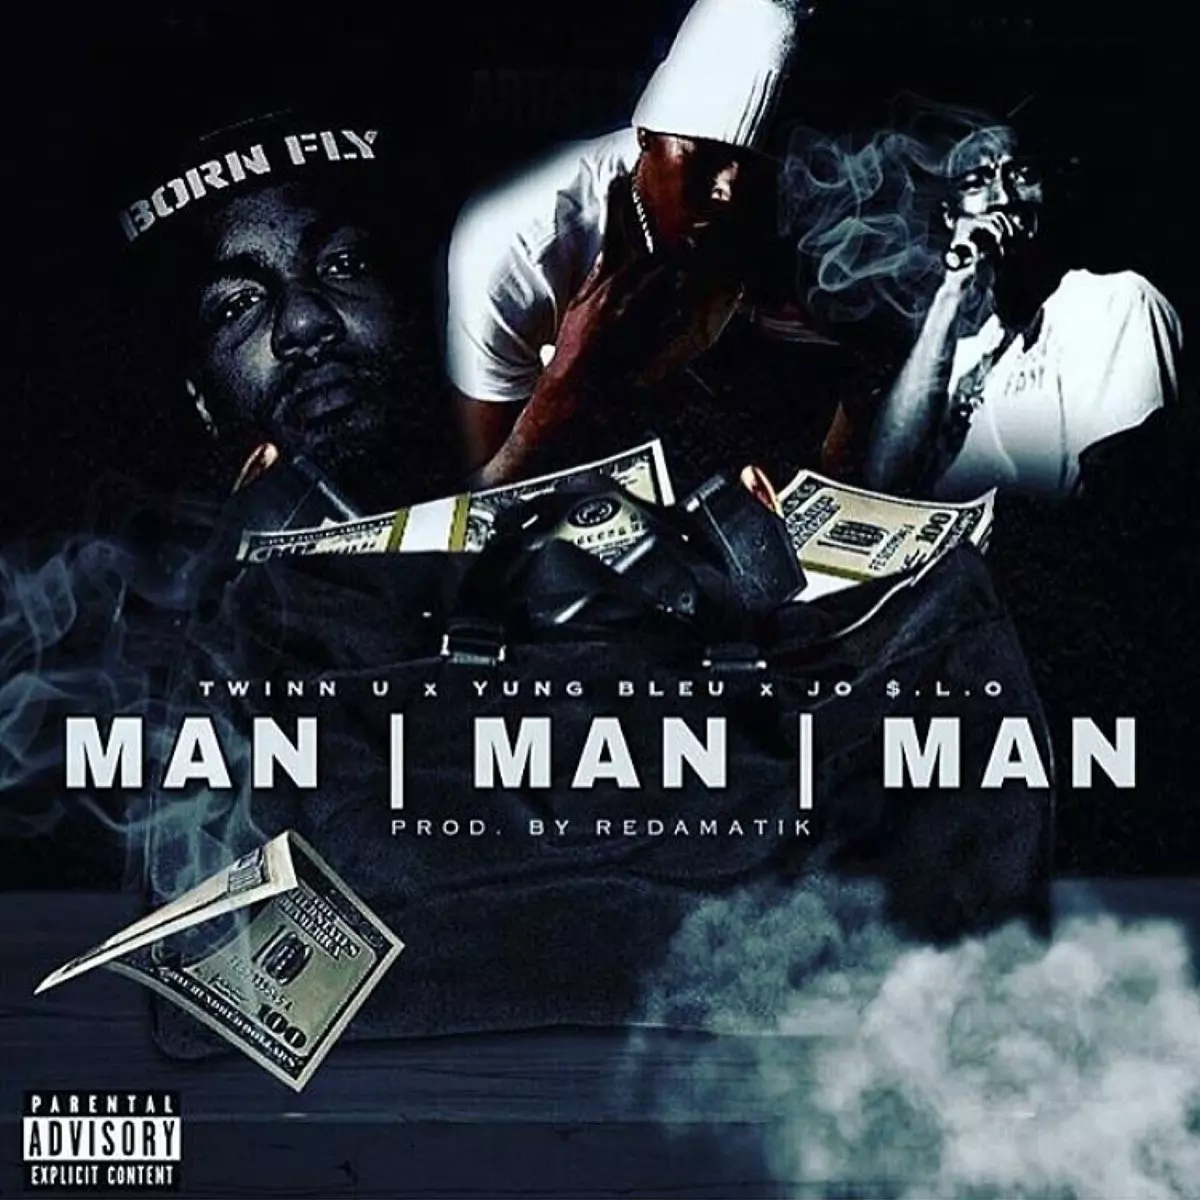 Man Man Man - Single by Yung Bleu, Twinn U & Jo Slo on Apple Music